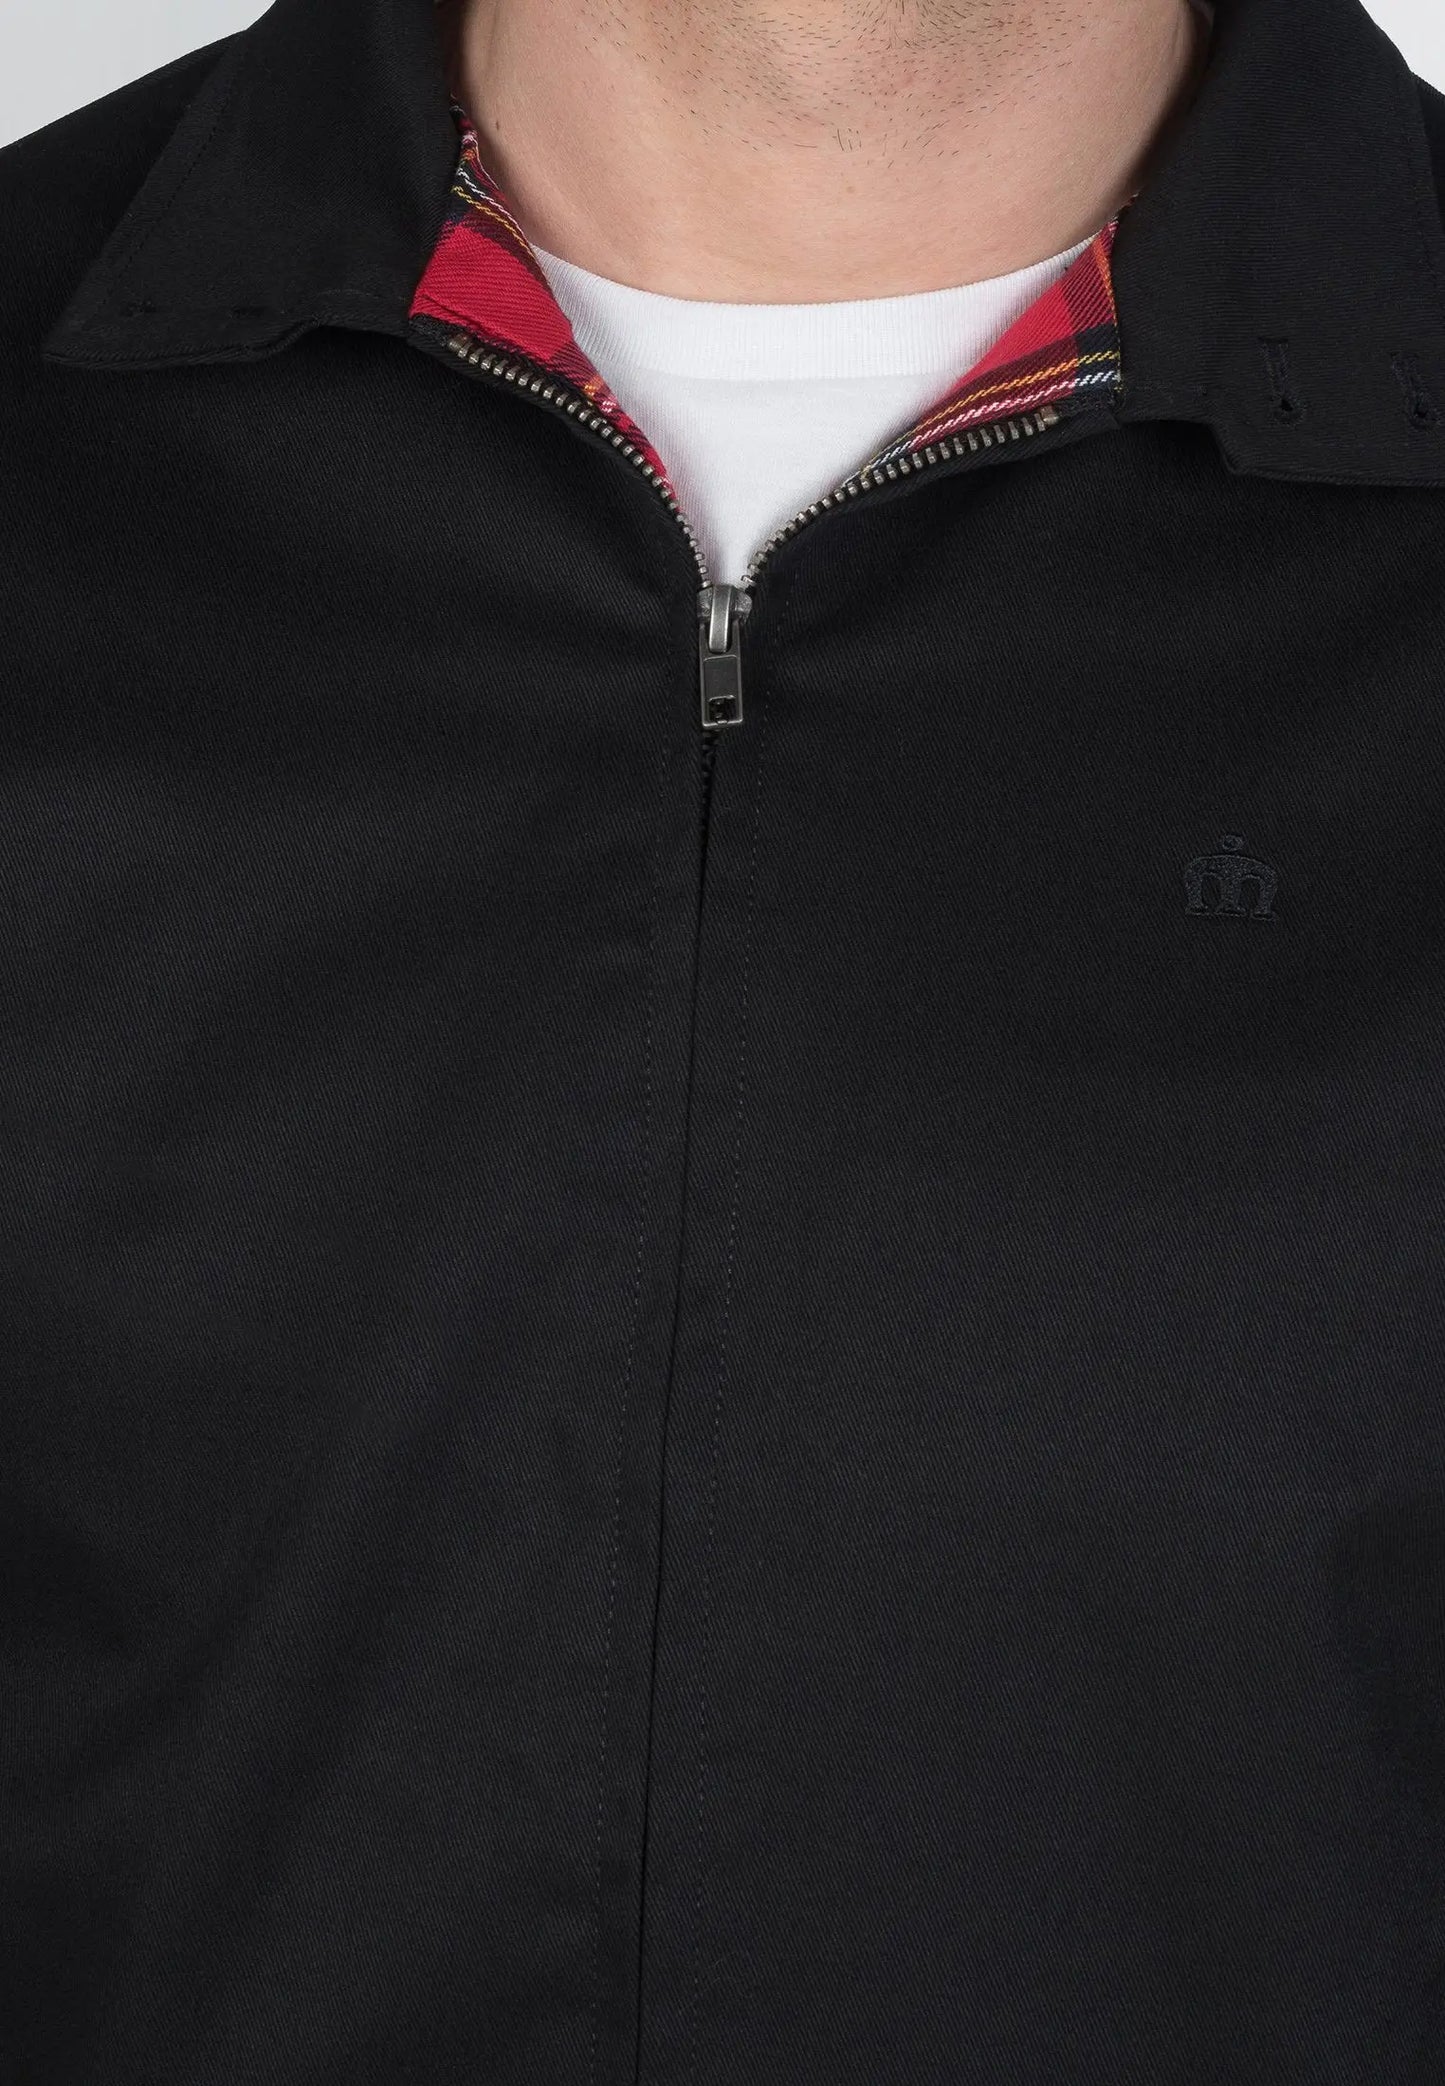 Merc London Harrington Cotton Jacket - Black From Woven Durham